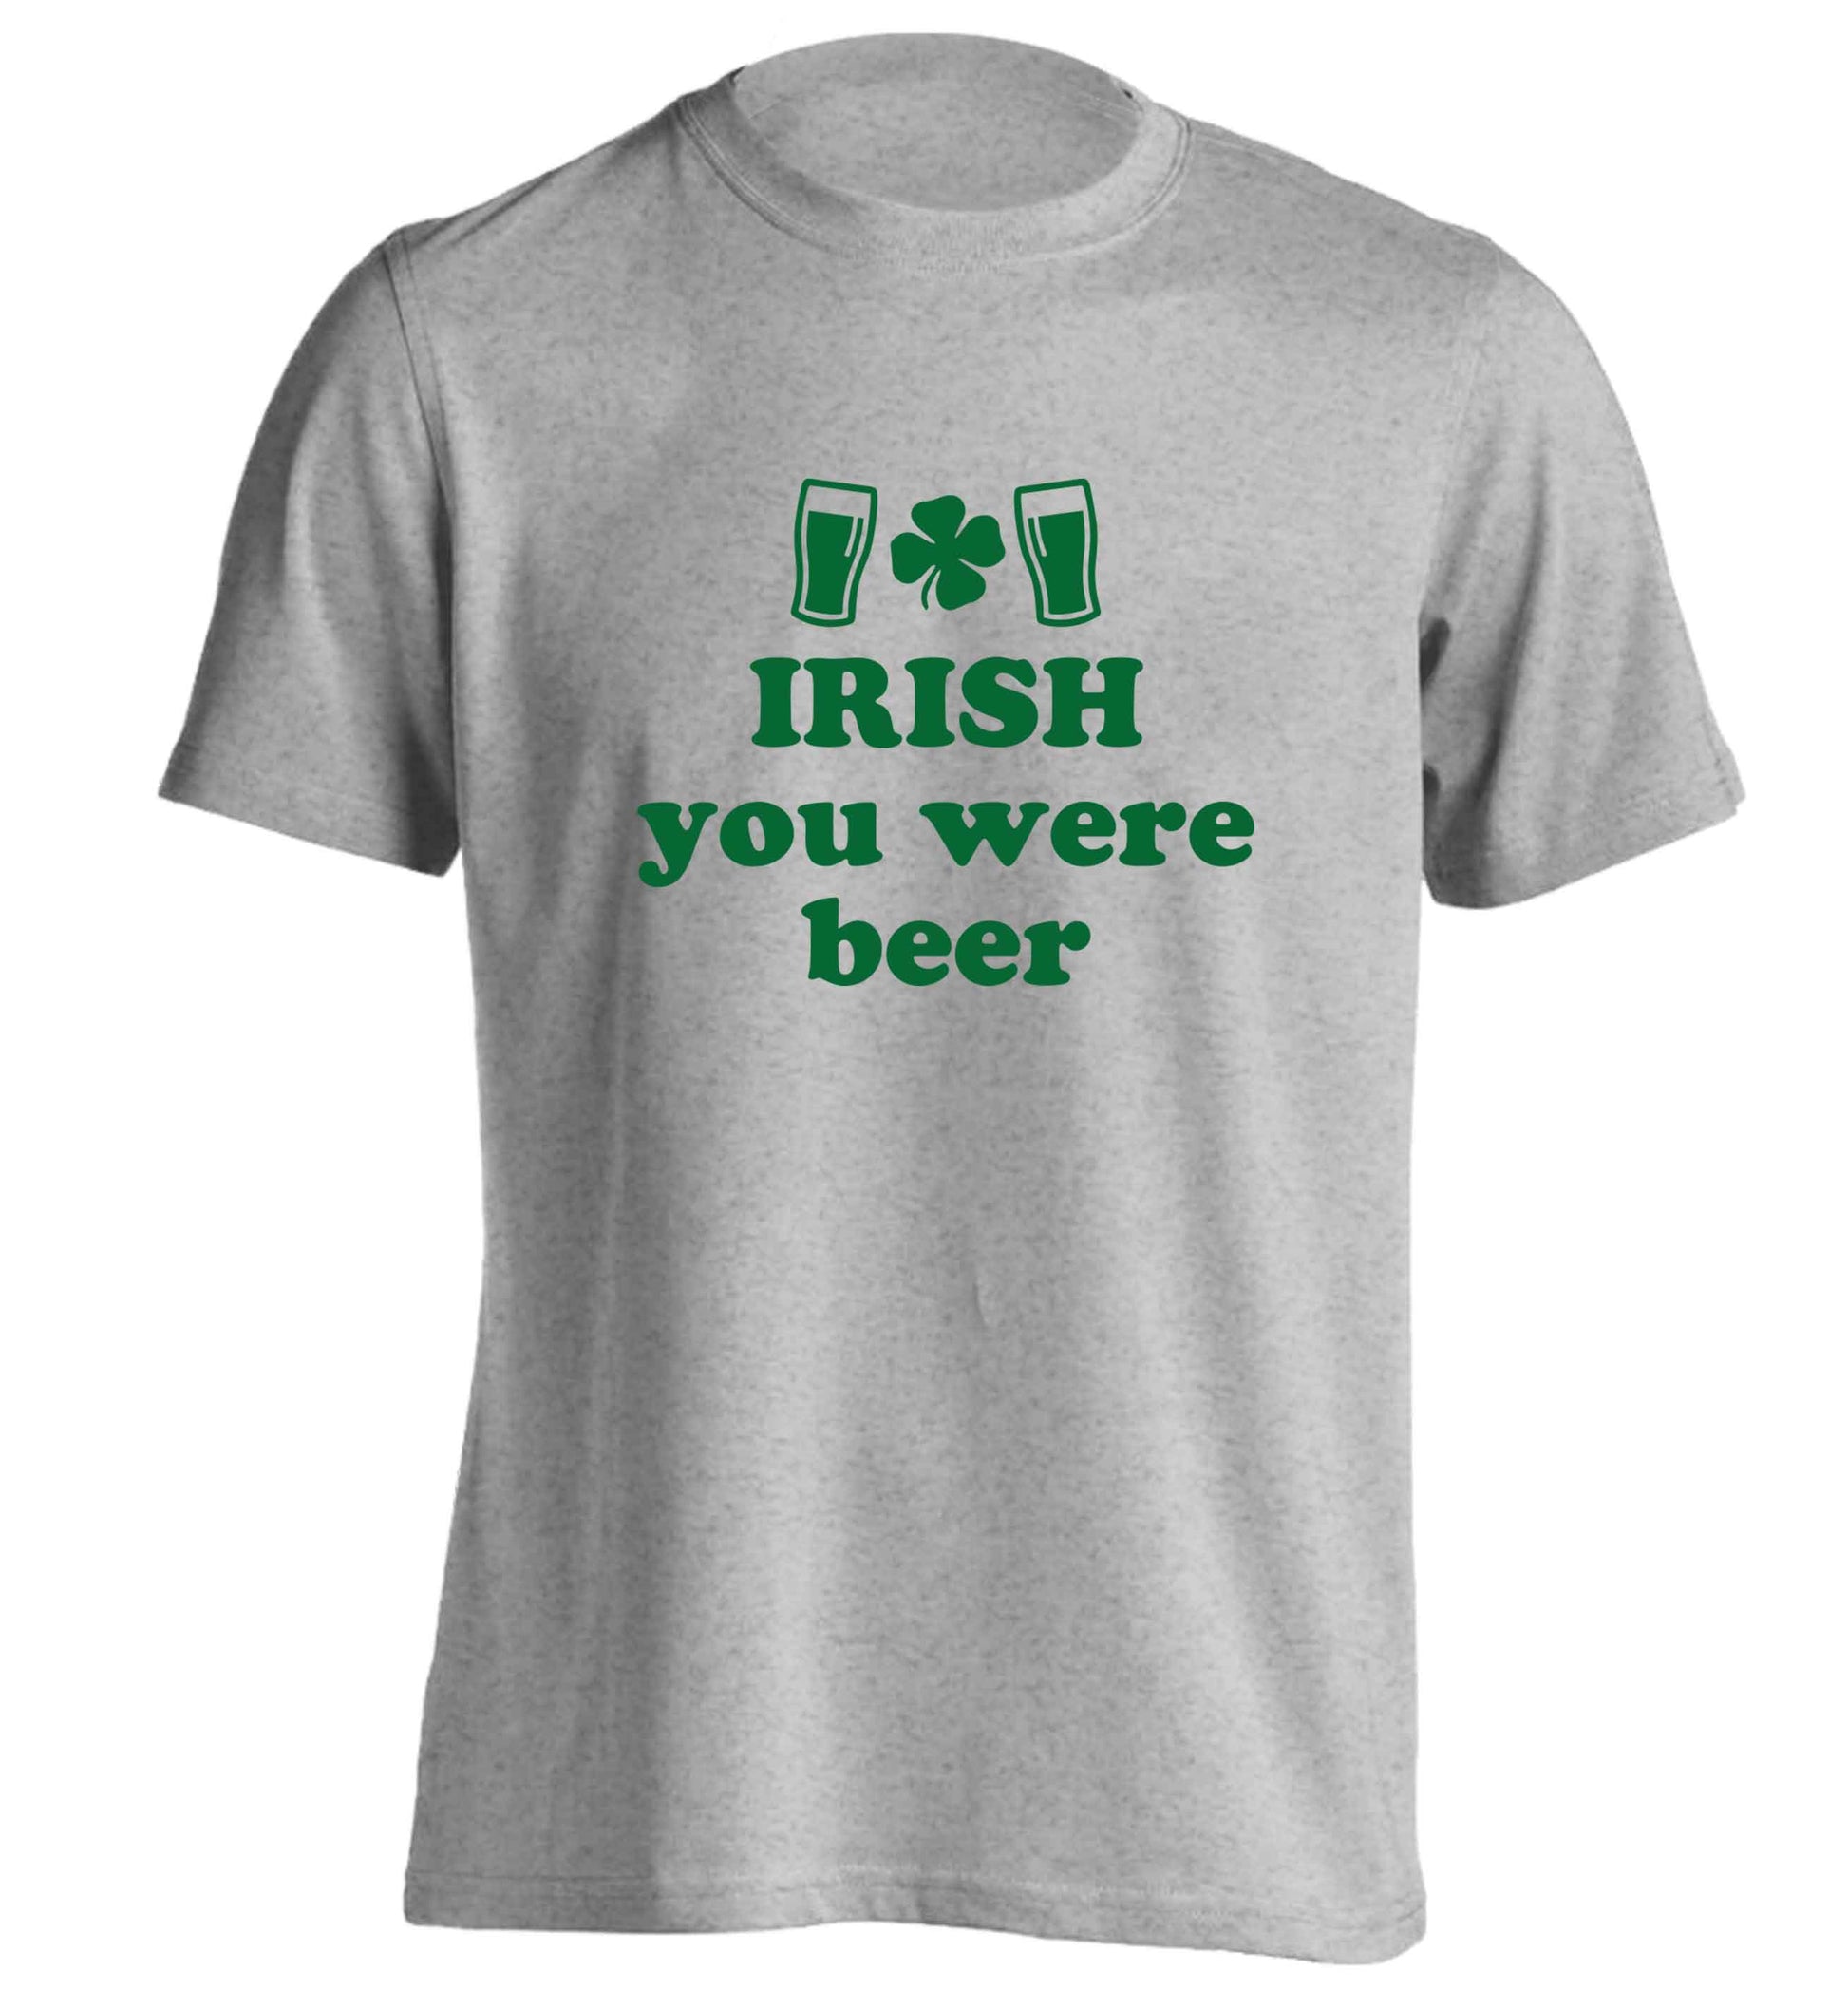 Irish you were beer adults unisex grey Tshirt 2XL